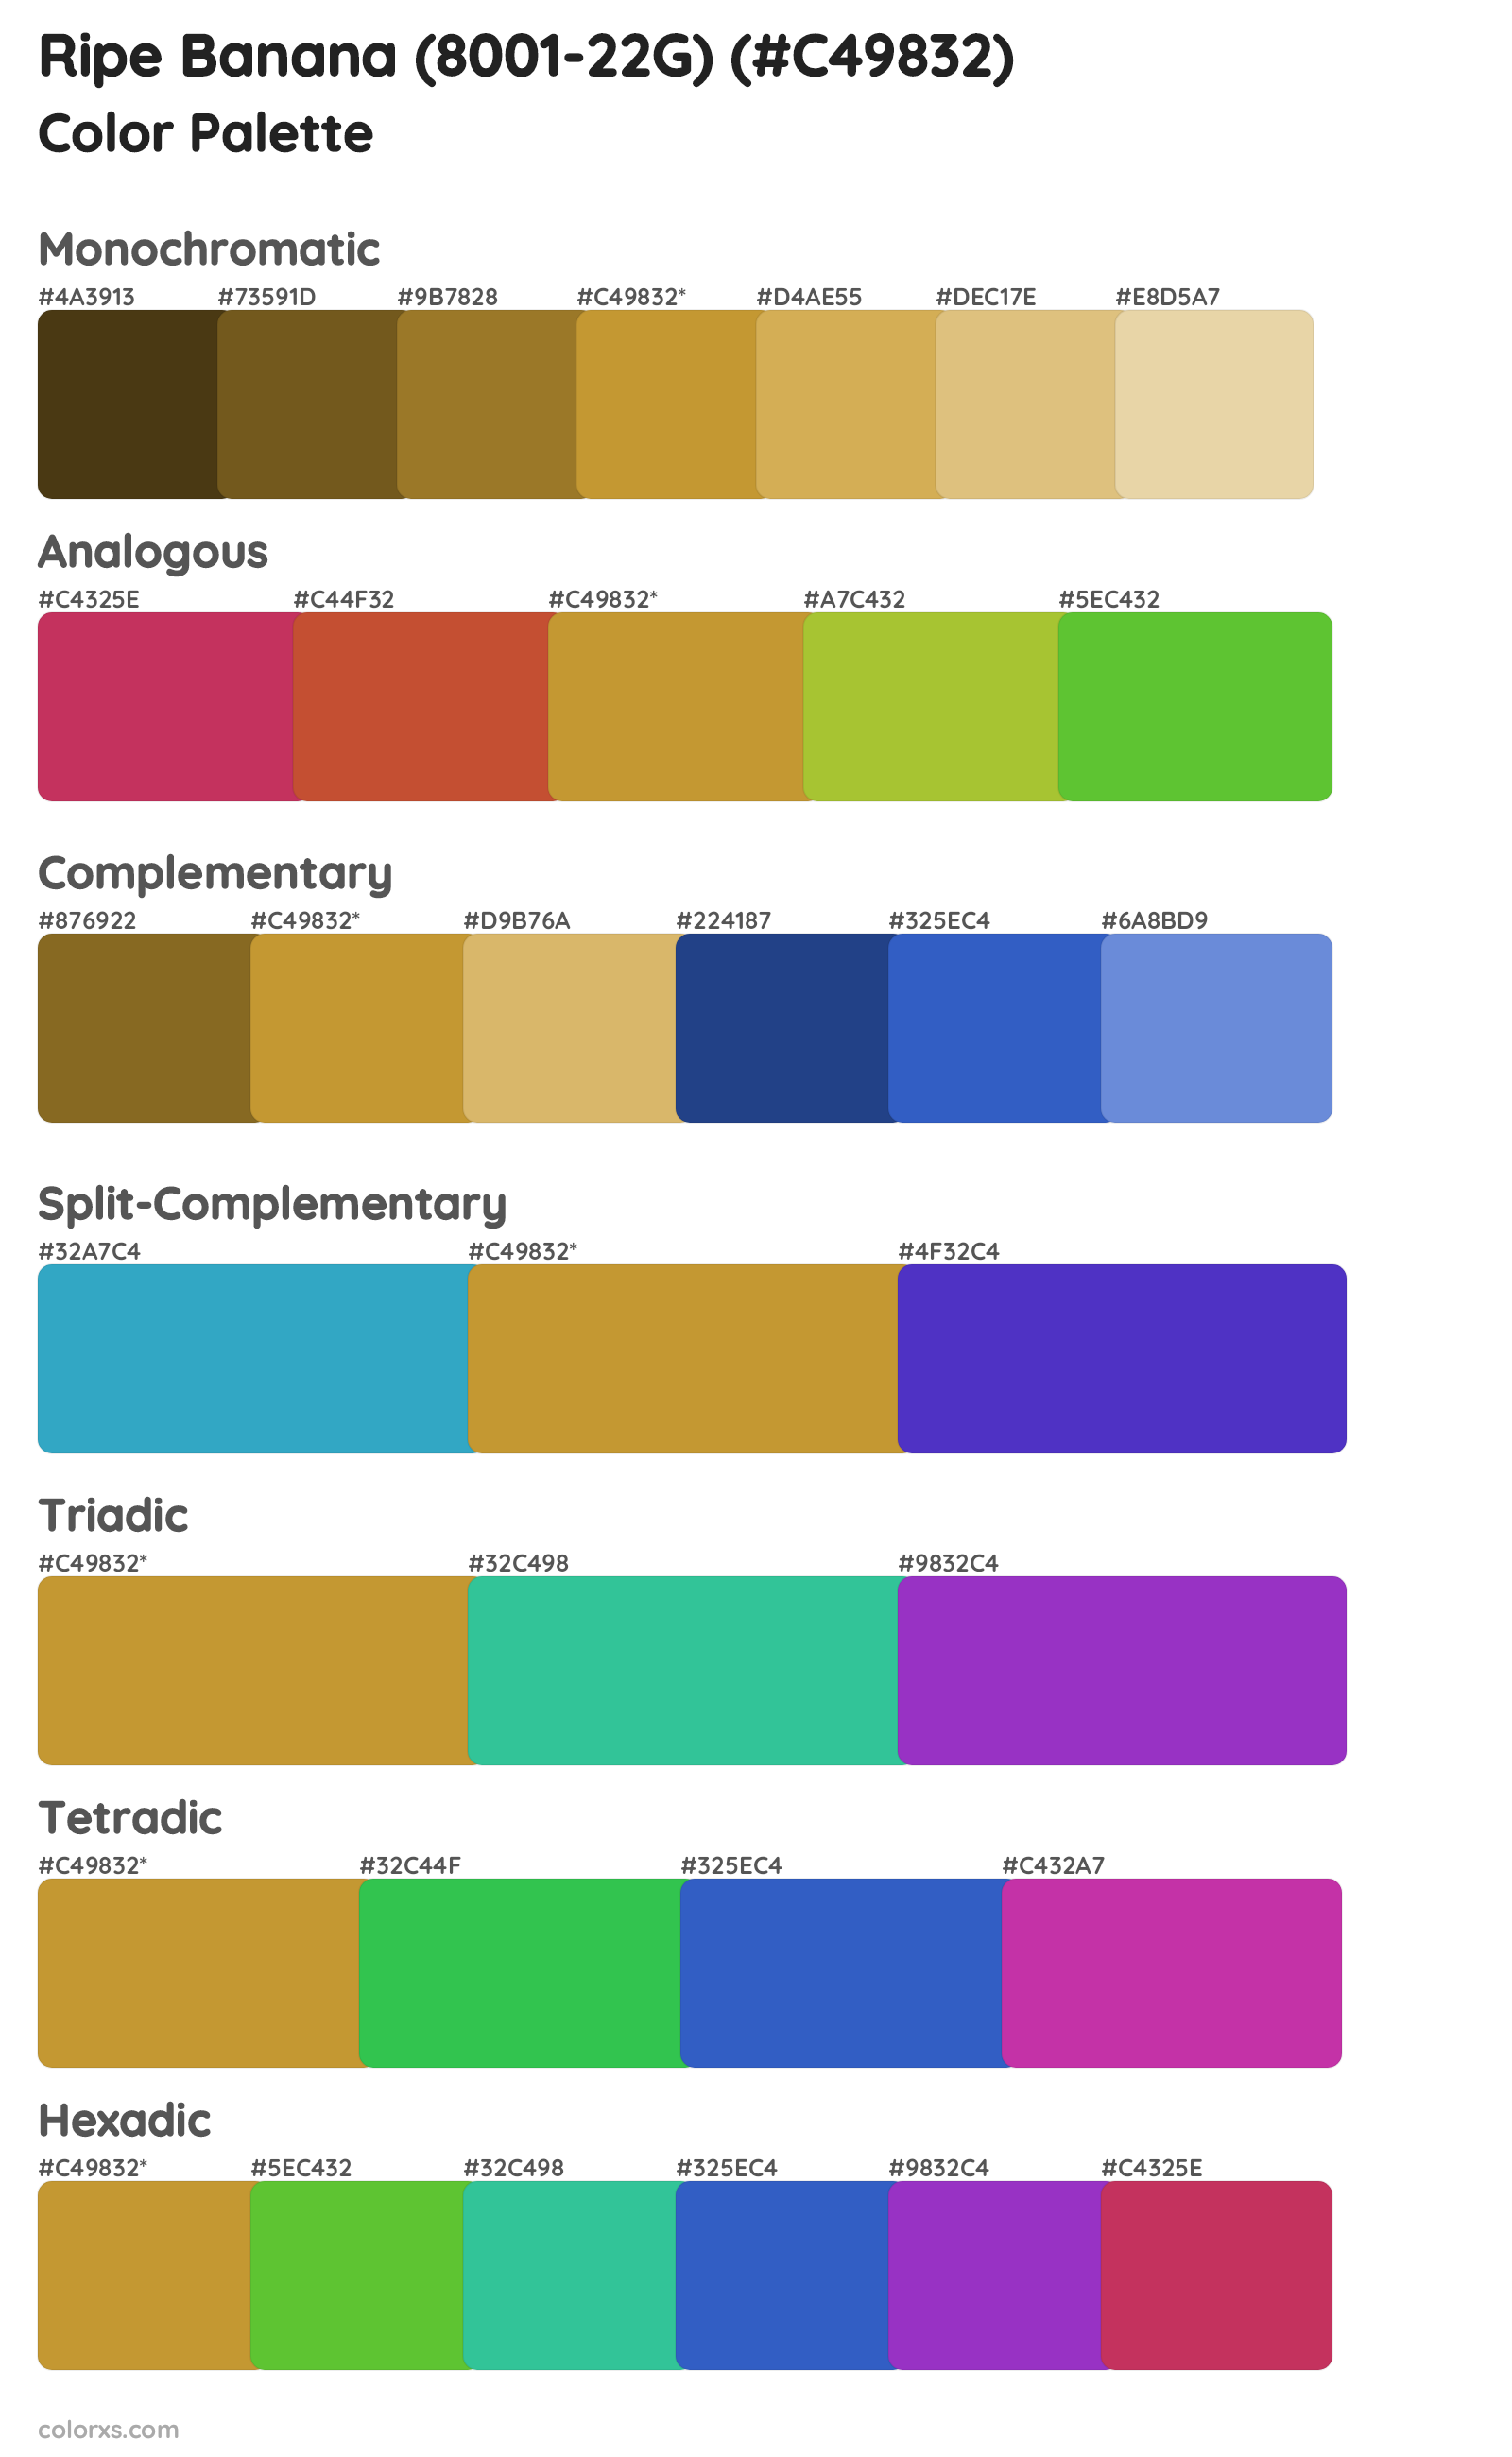 Ripe Banana (8001-22G) Color Scheme Palettes